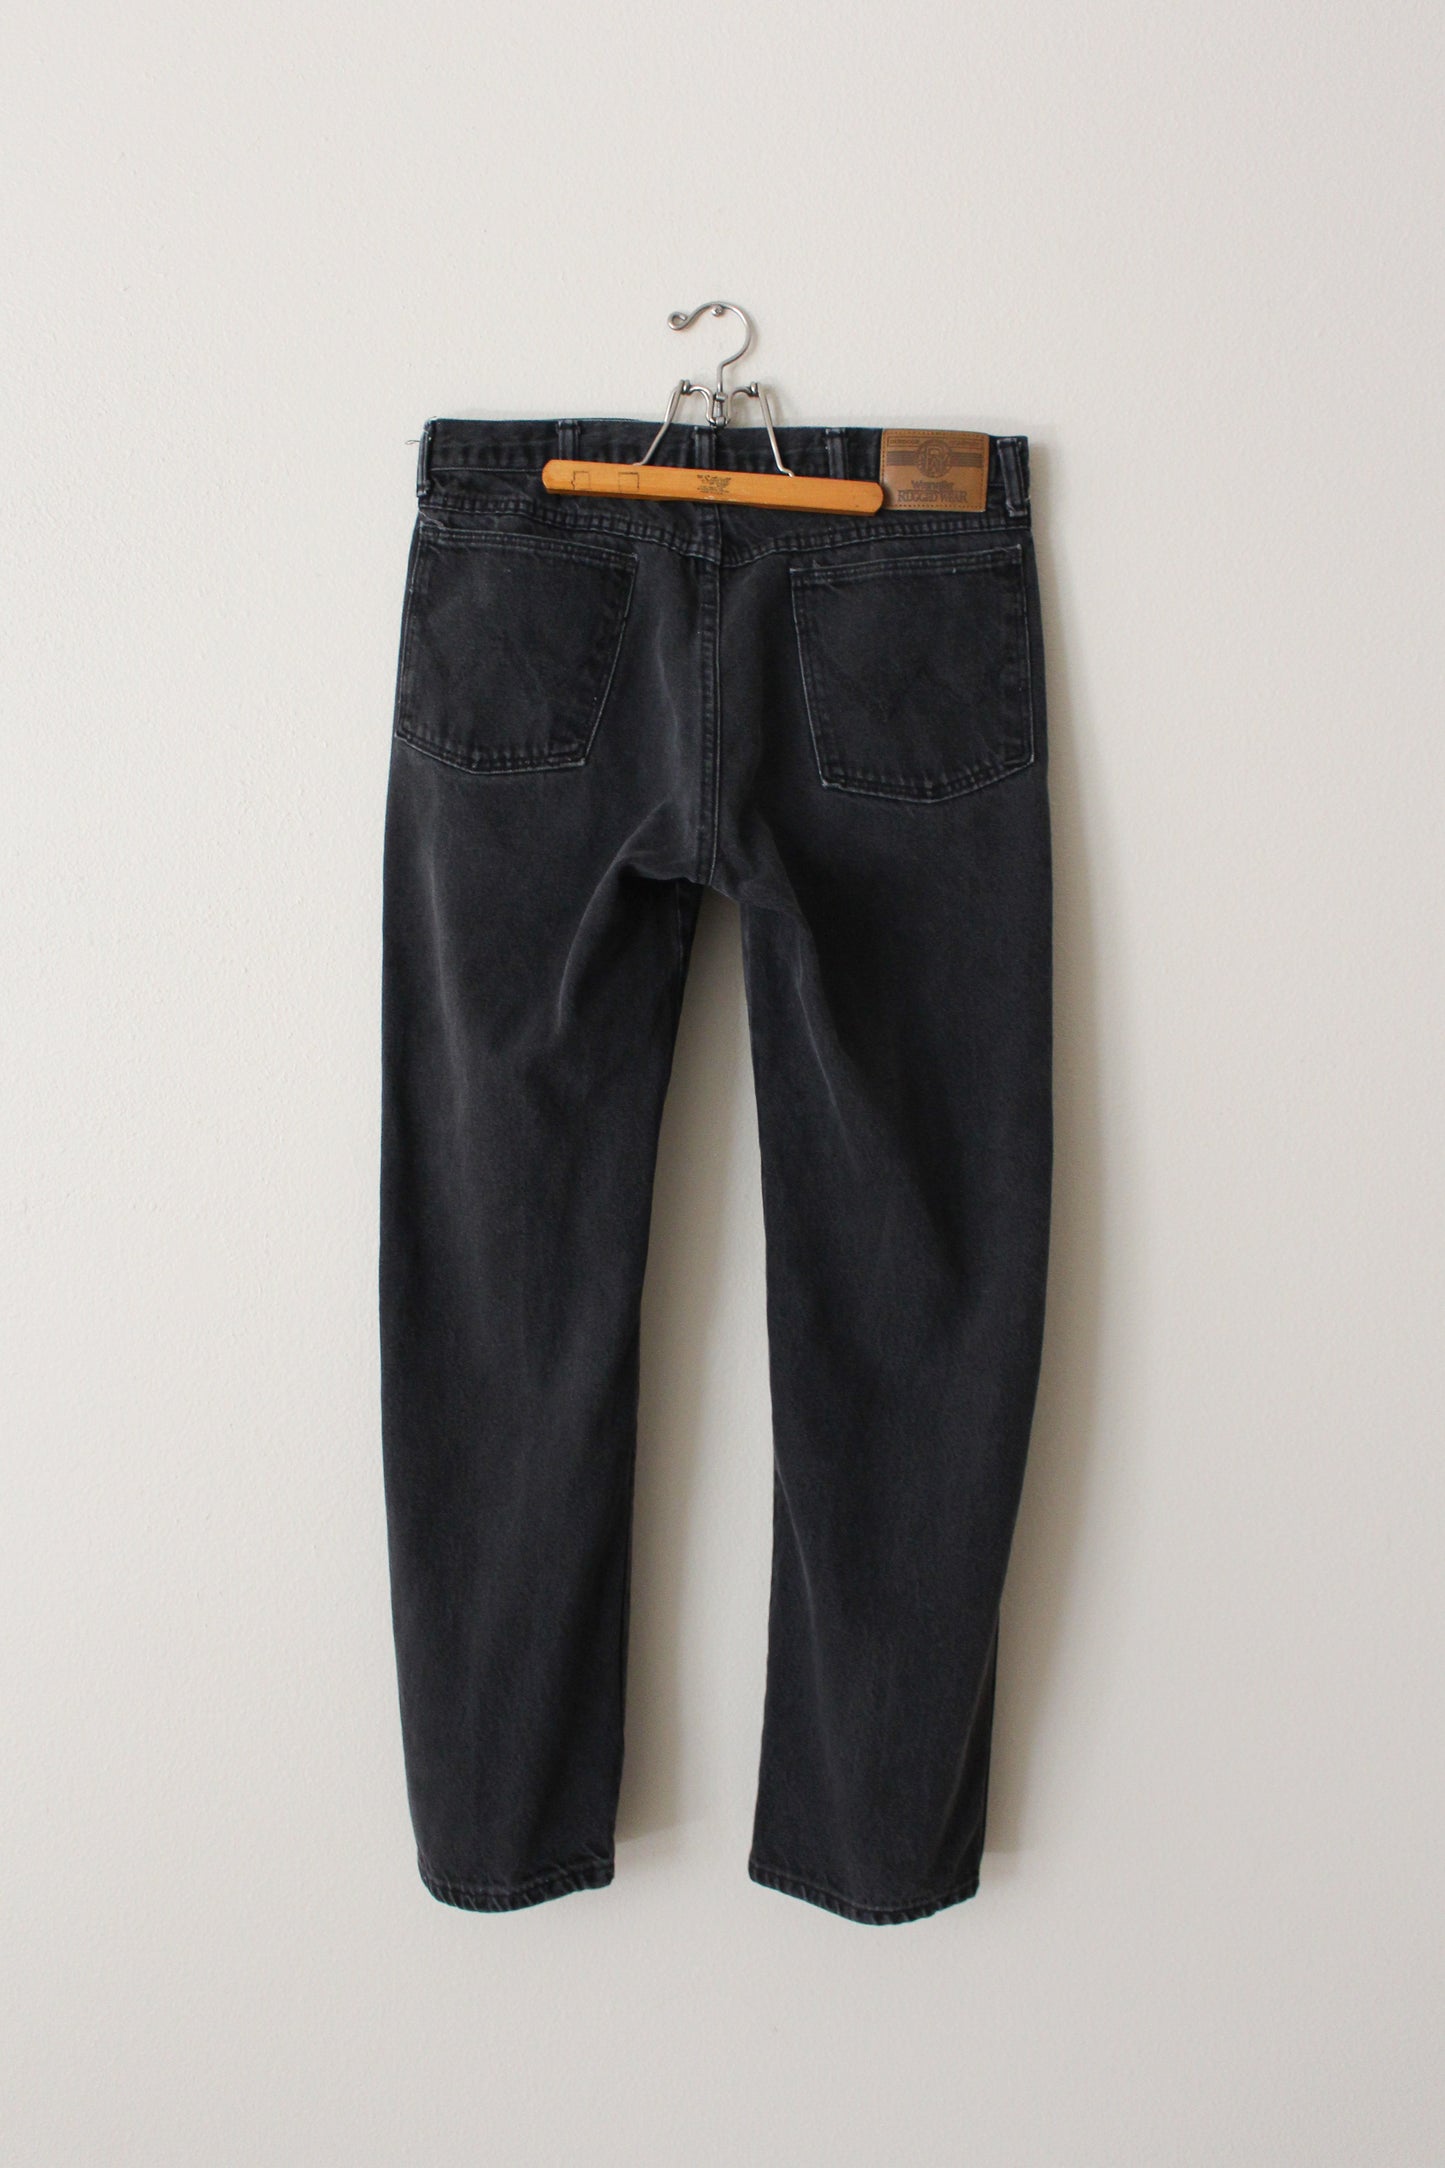 vintage wrangler black jeans denim 